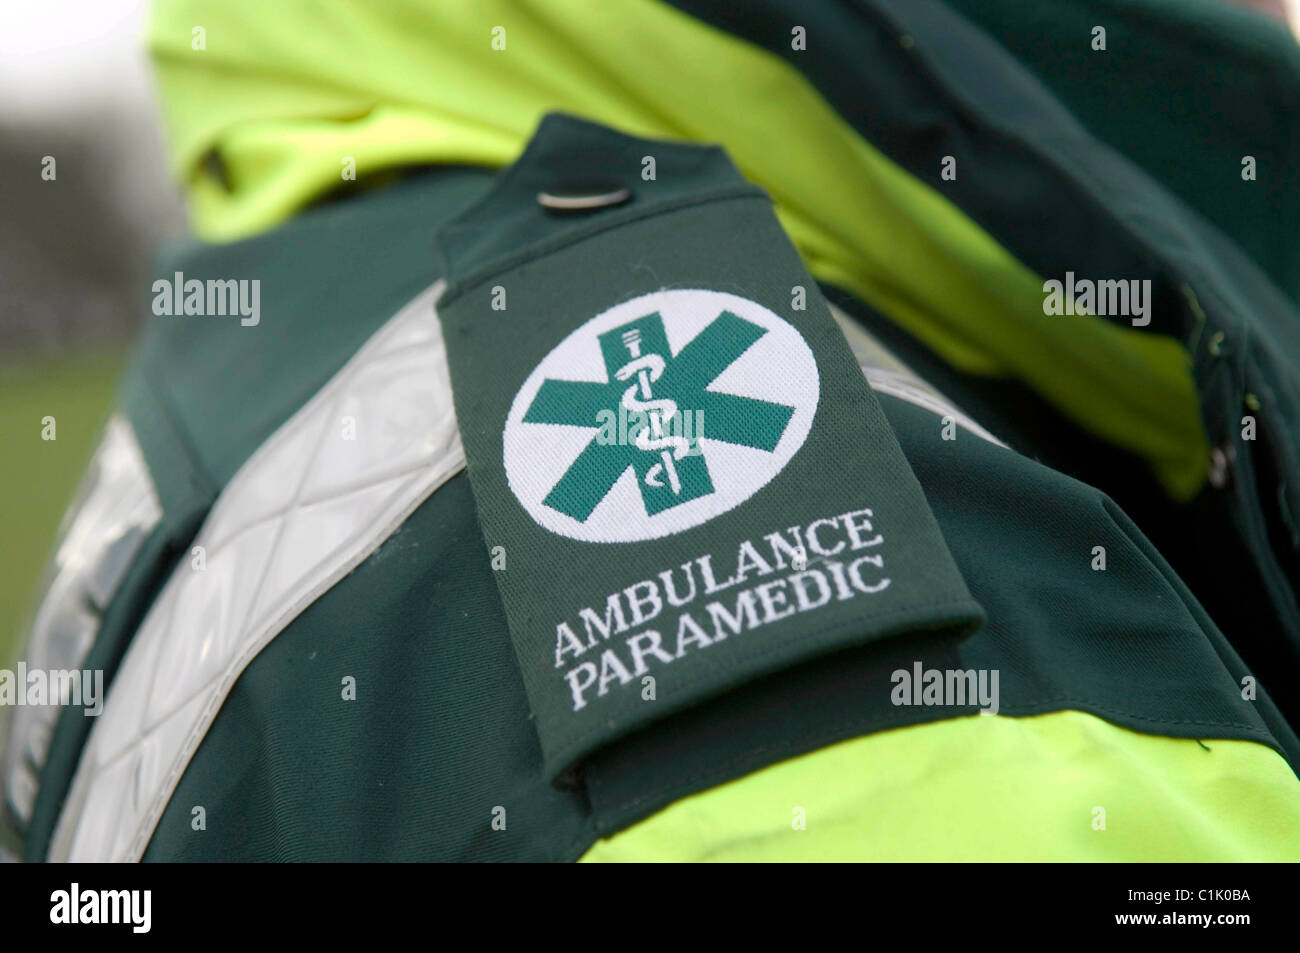 Eksklusiv At deaktivere designer Badge detail on the jacket of an Ambulance Paramedic Stock Photo - Alamy